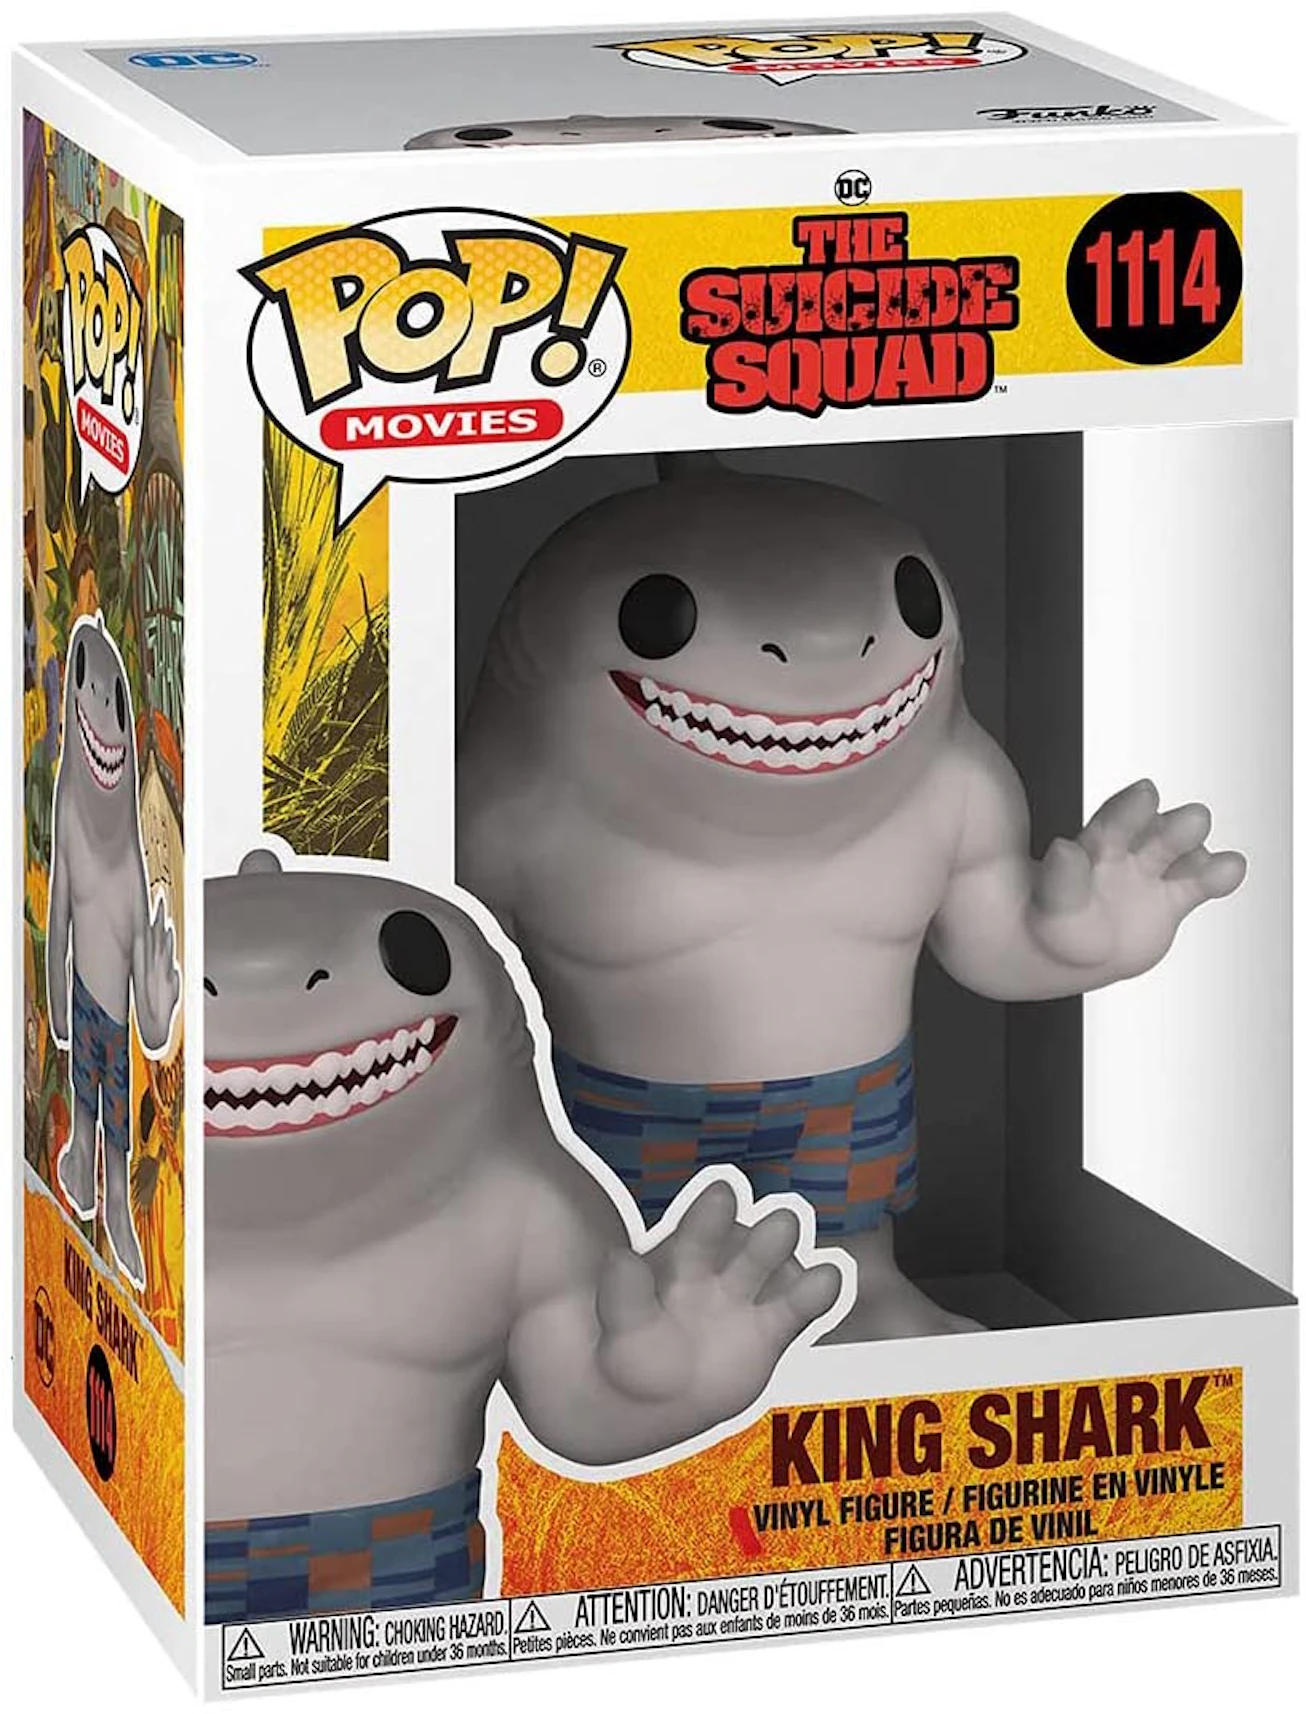 Funko-Pop-Movies-DC-The-Suicide-Squad-King-Shark-Figure-1114.jpg